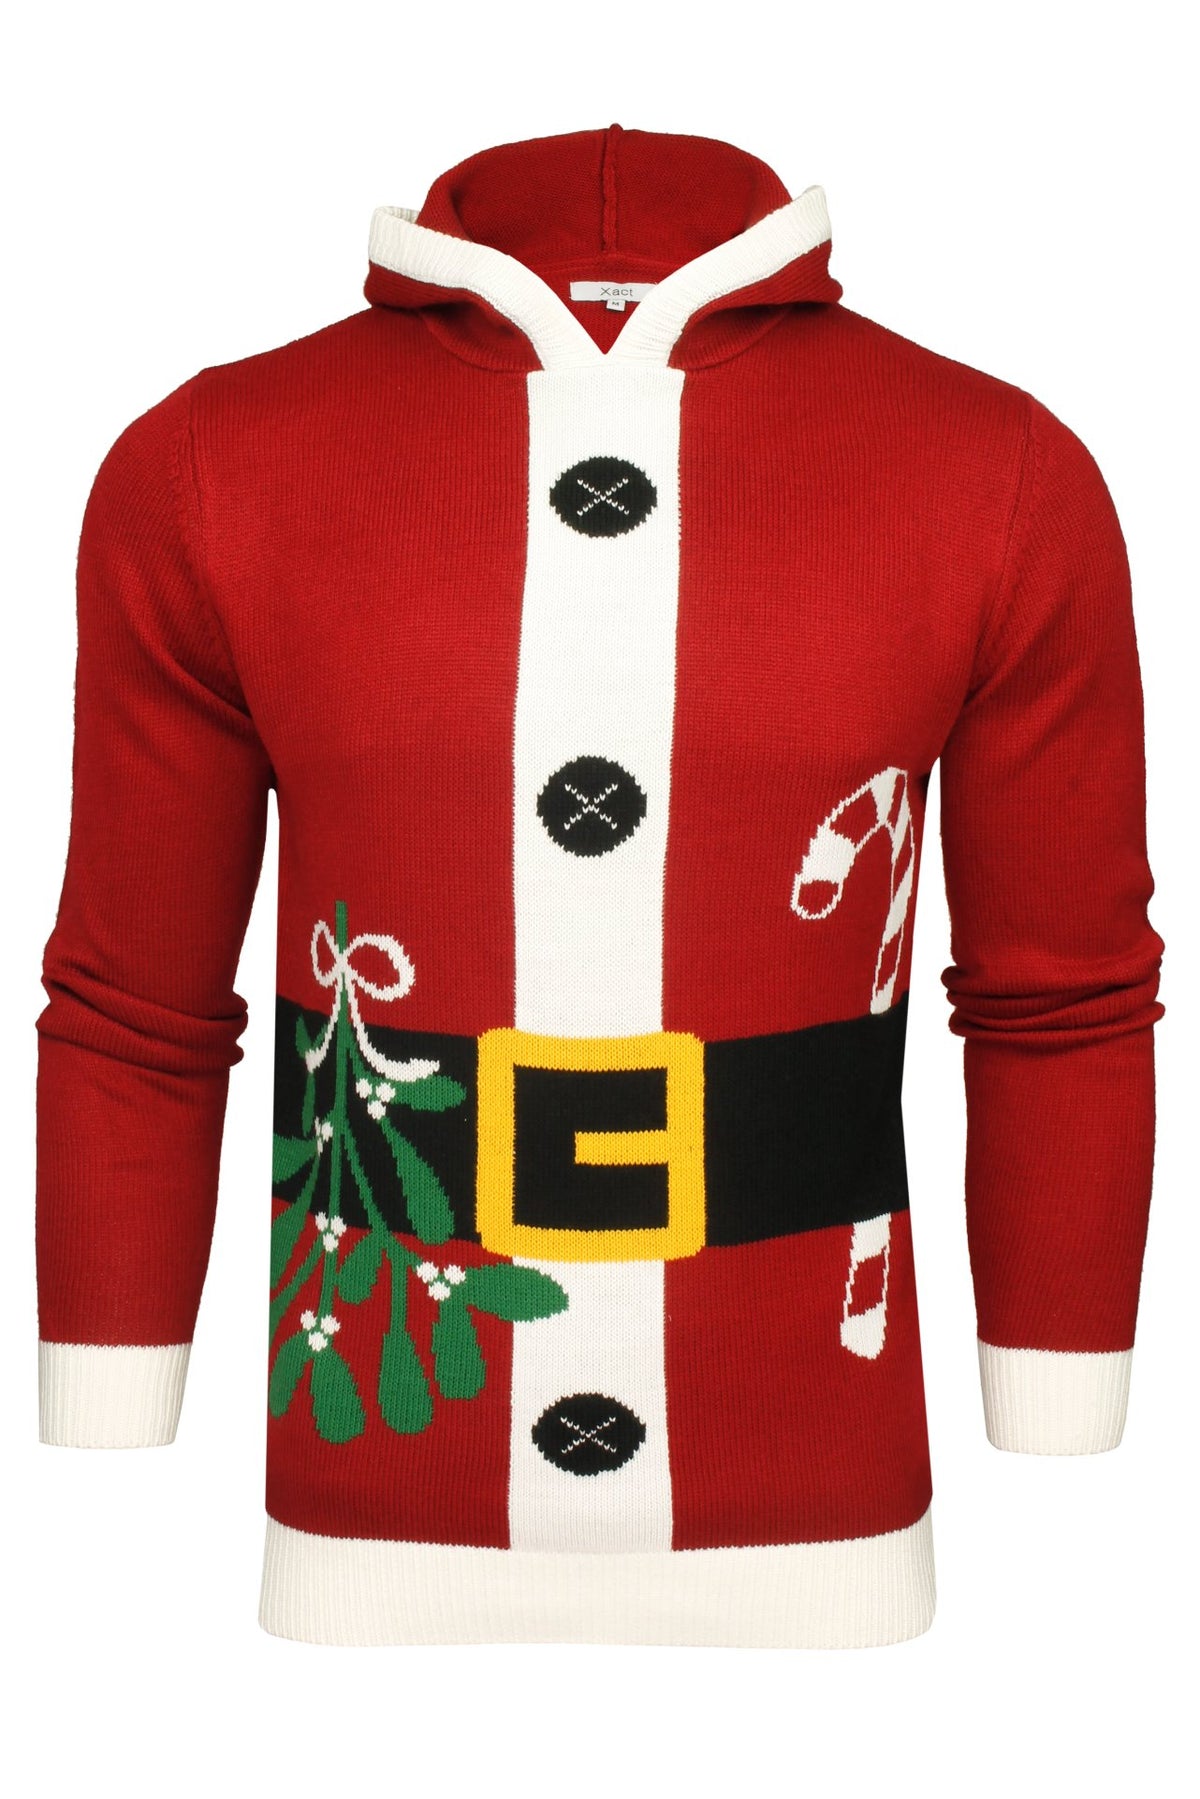 Men's Xact Novelty Hooded Christmas Jumper, 01, XK1010, Santa - Red